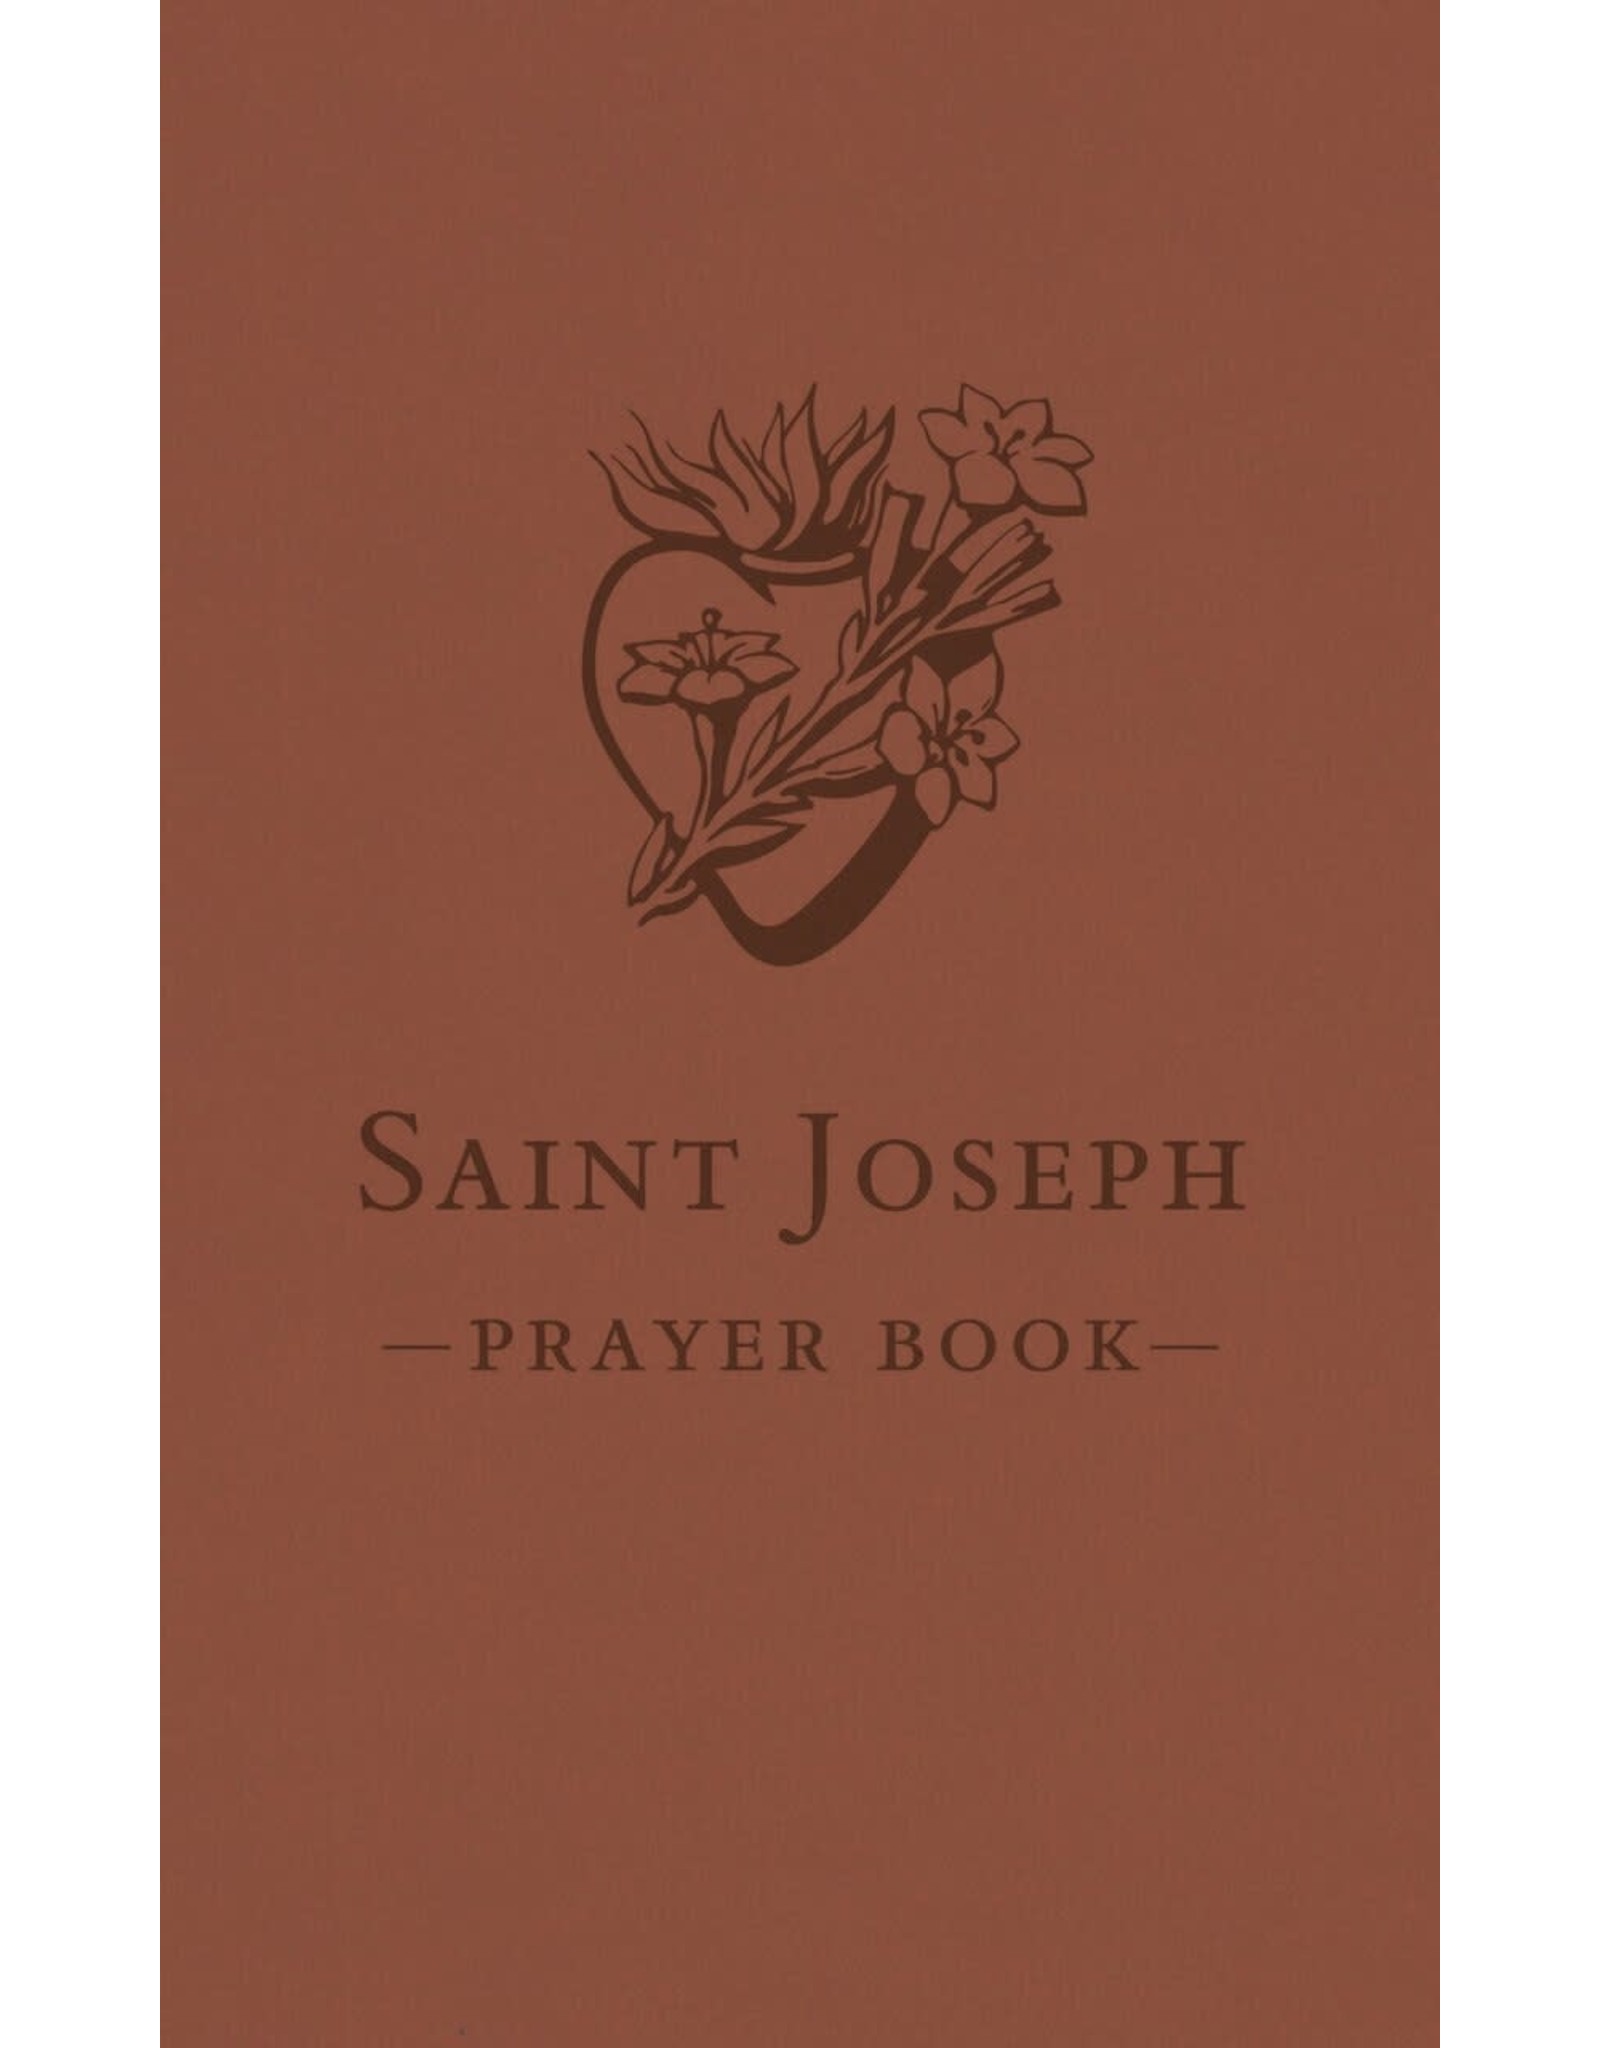 Tan Books Saint Joseph Prayerbook (Paperback)